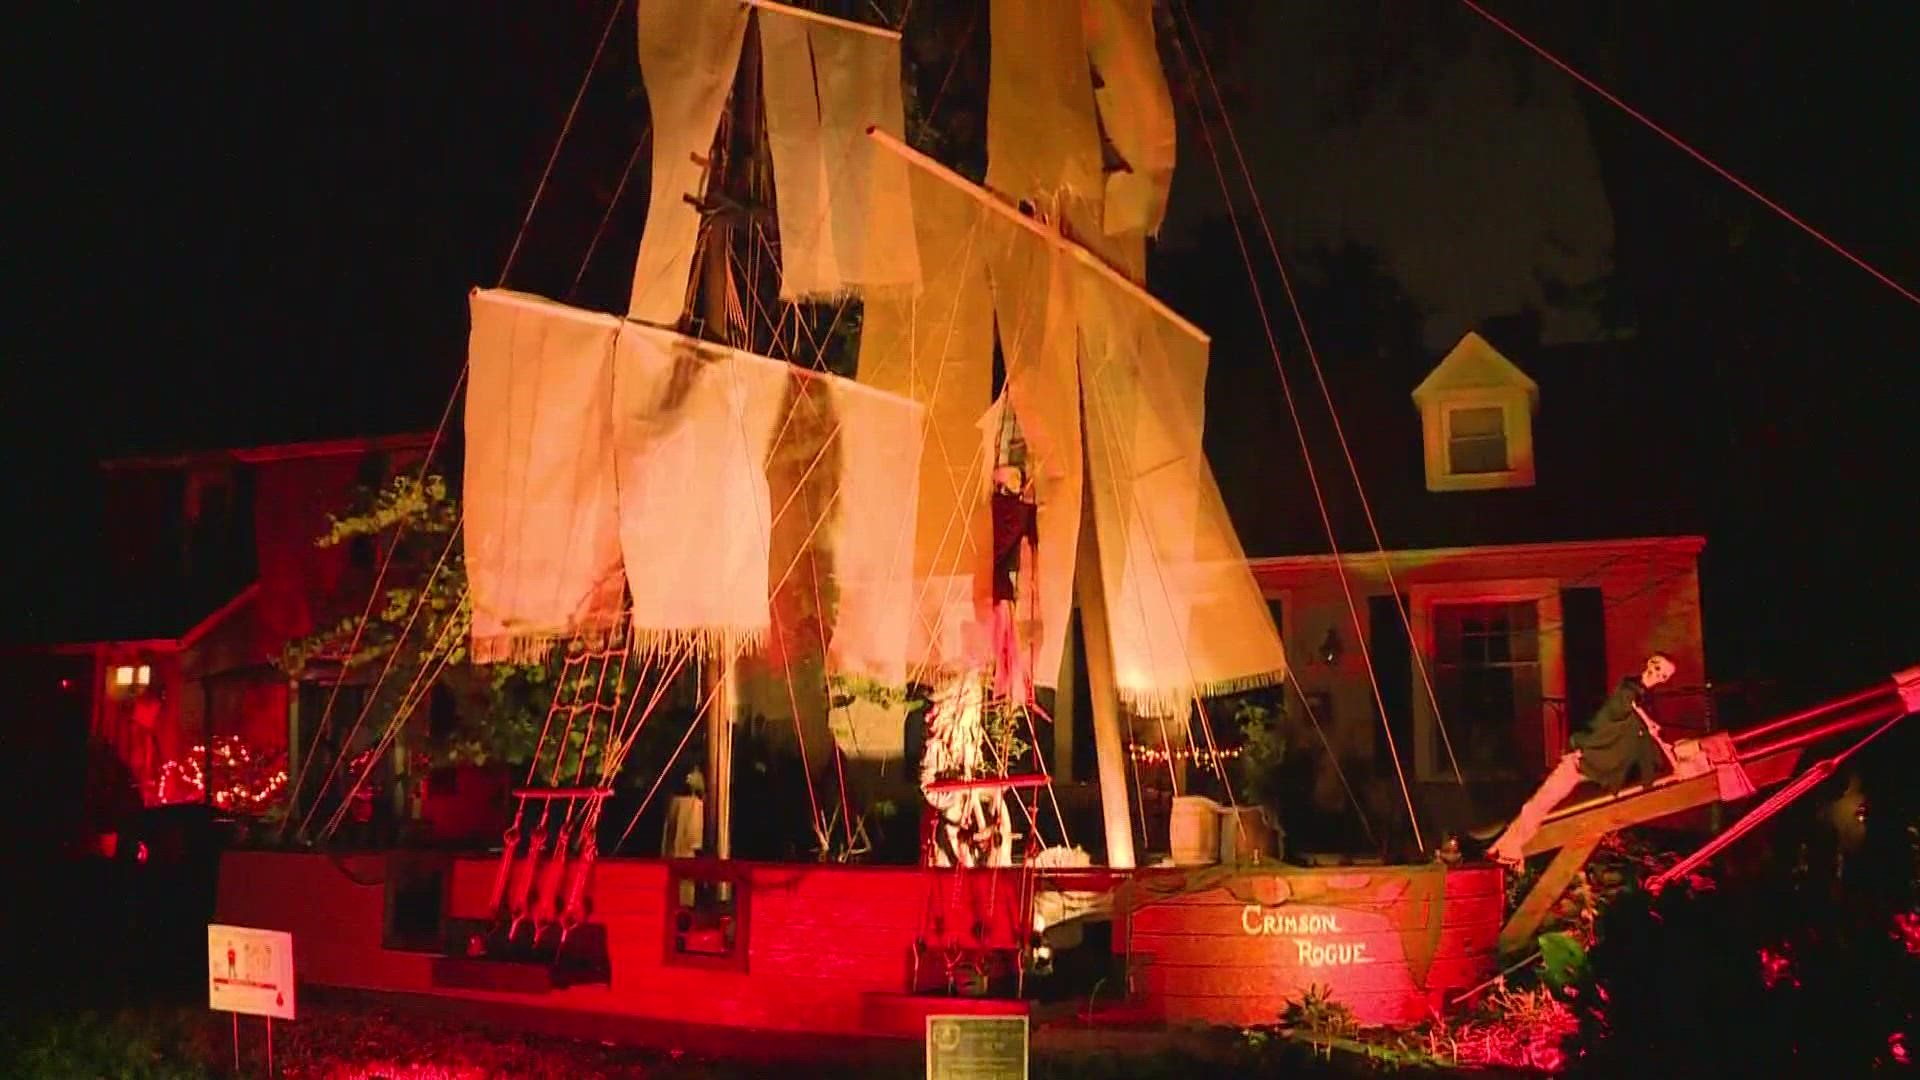 Epic Halloween decorations in Bay Village showcase massive pirate